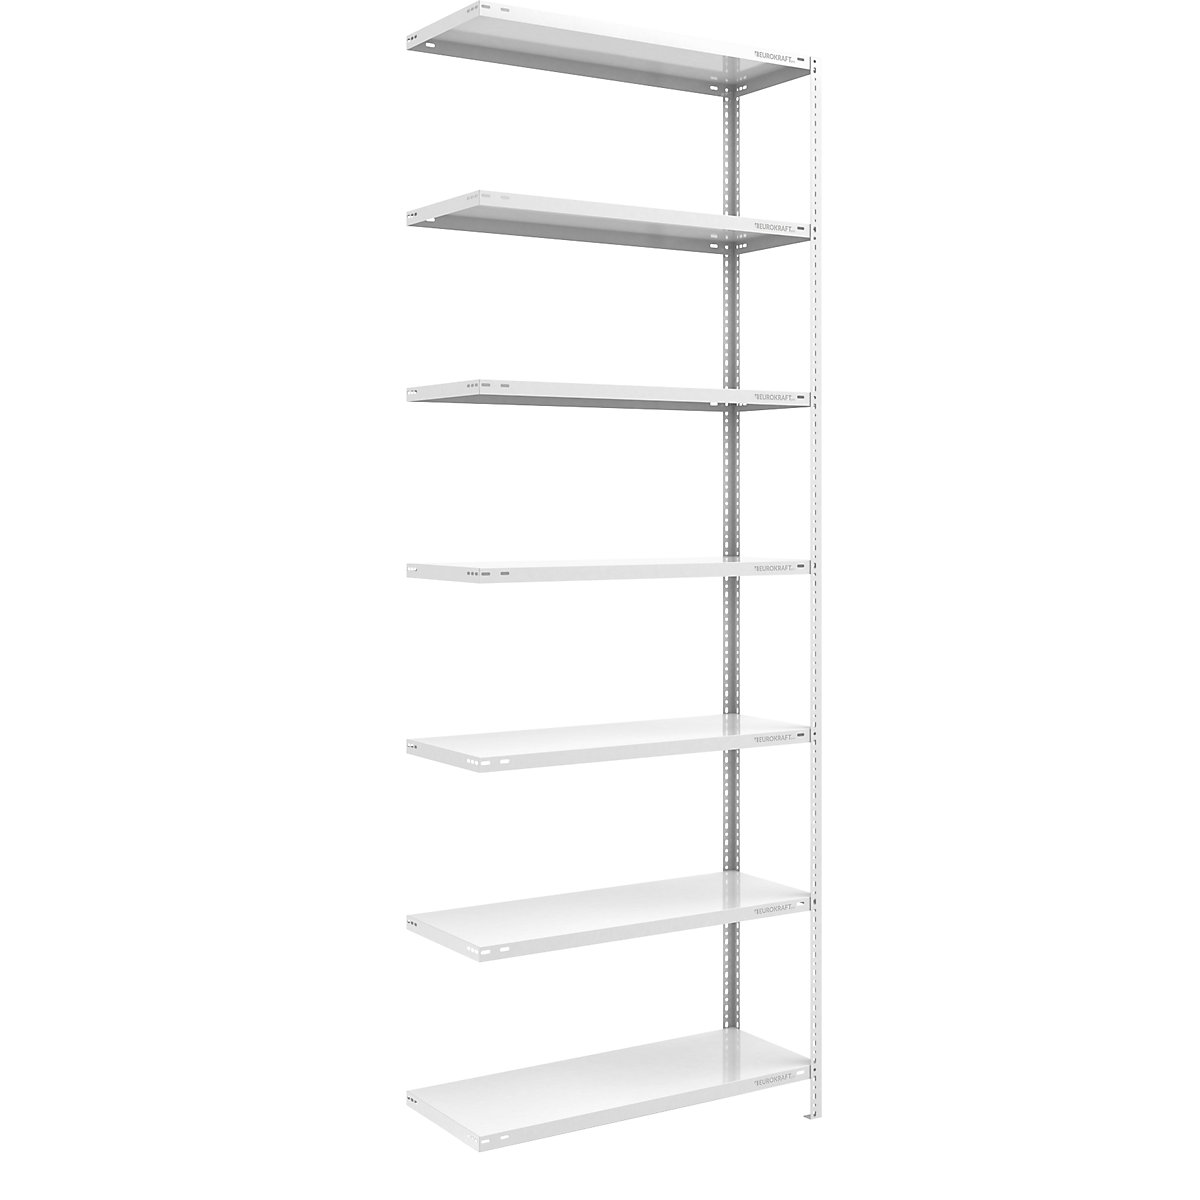 Bolt-together shelf unit, light duty, plastic coated – eurokraft pro, shelf unit height 3000 mm, shelf width 1000 mm, depth 500 mm, extension shelf unit-4